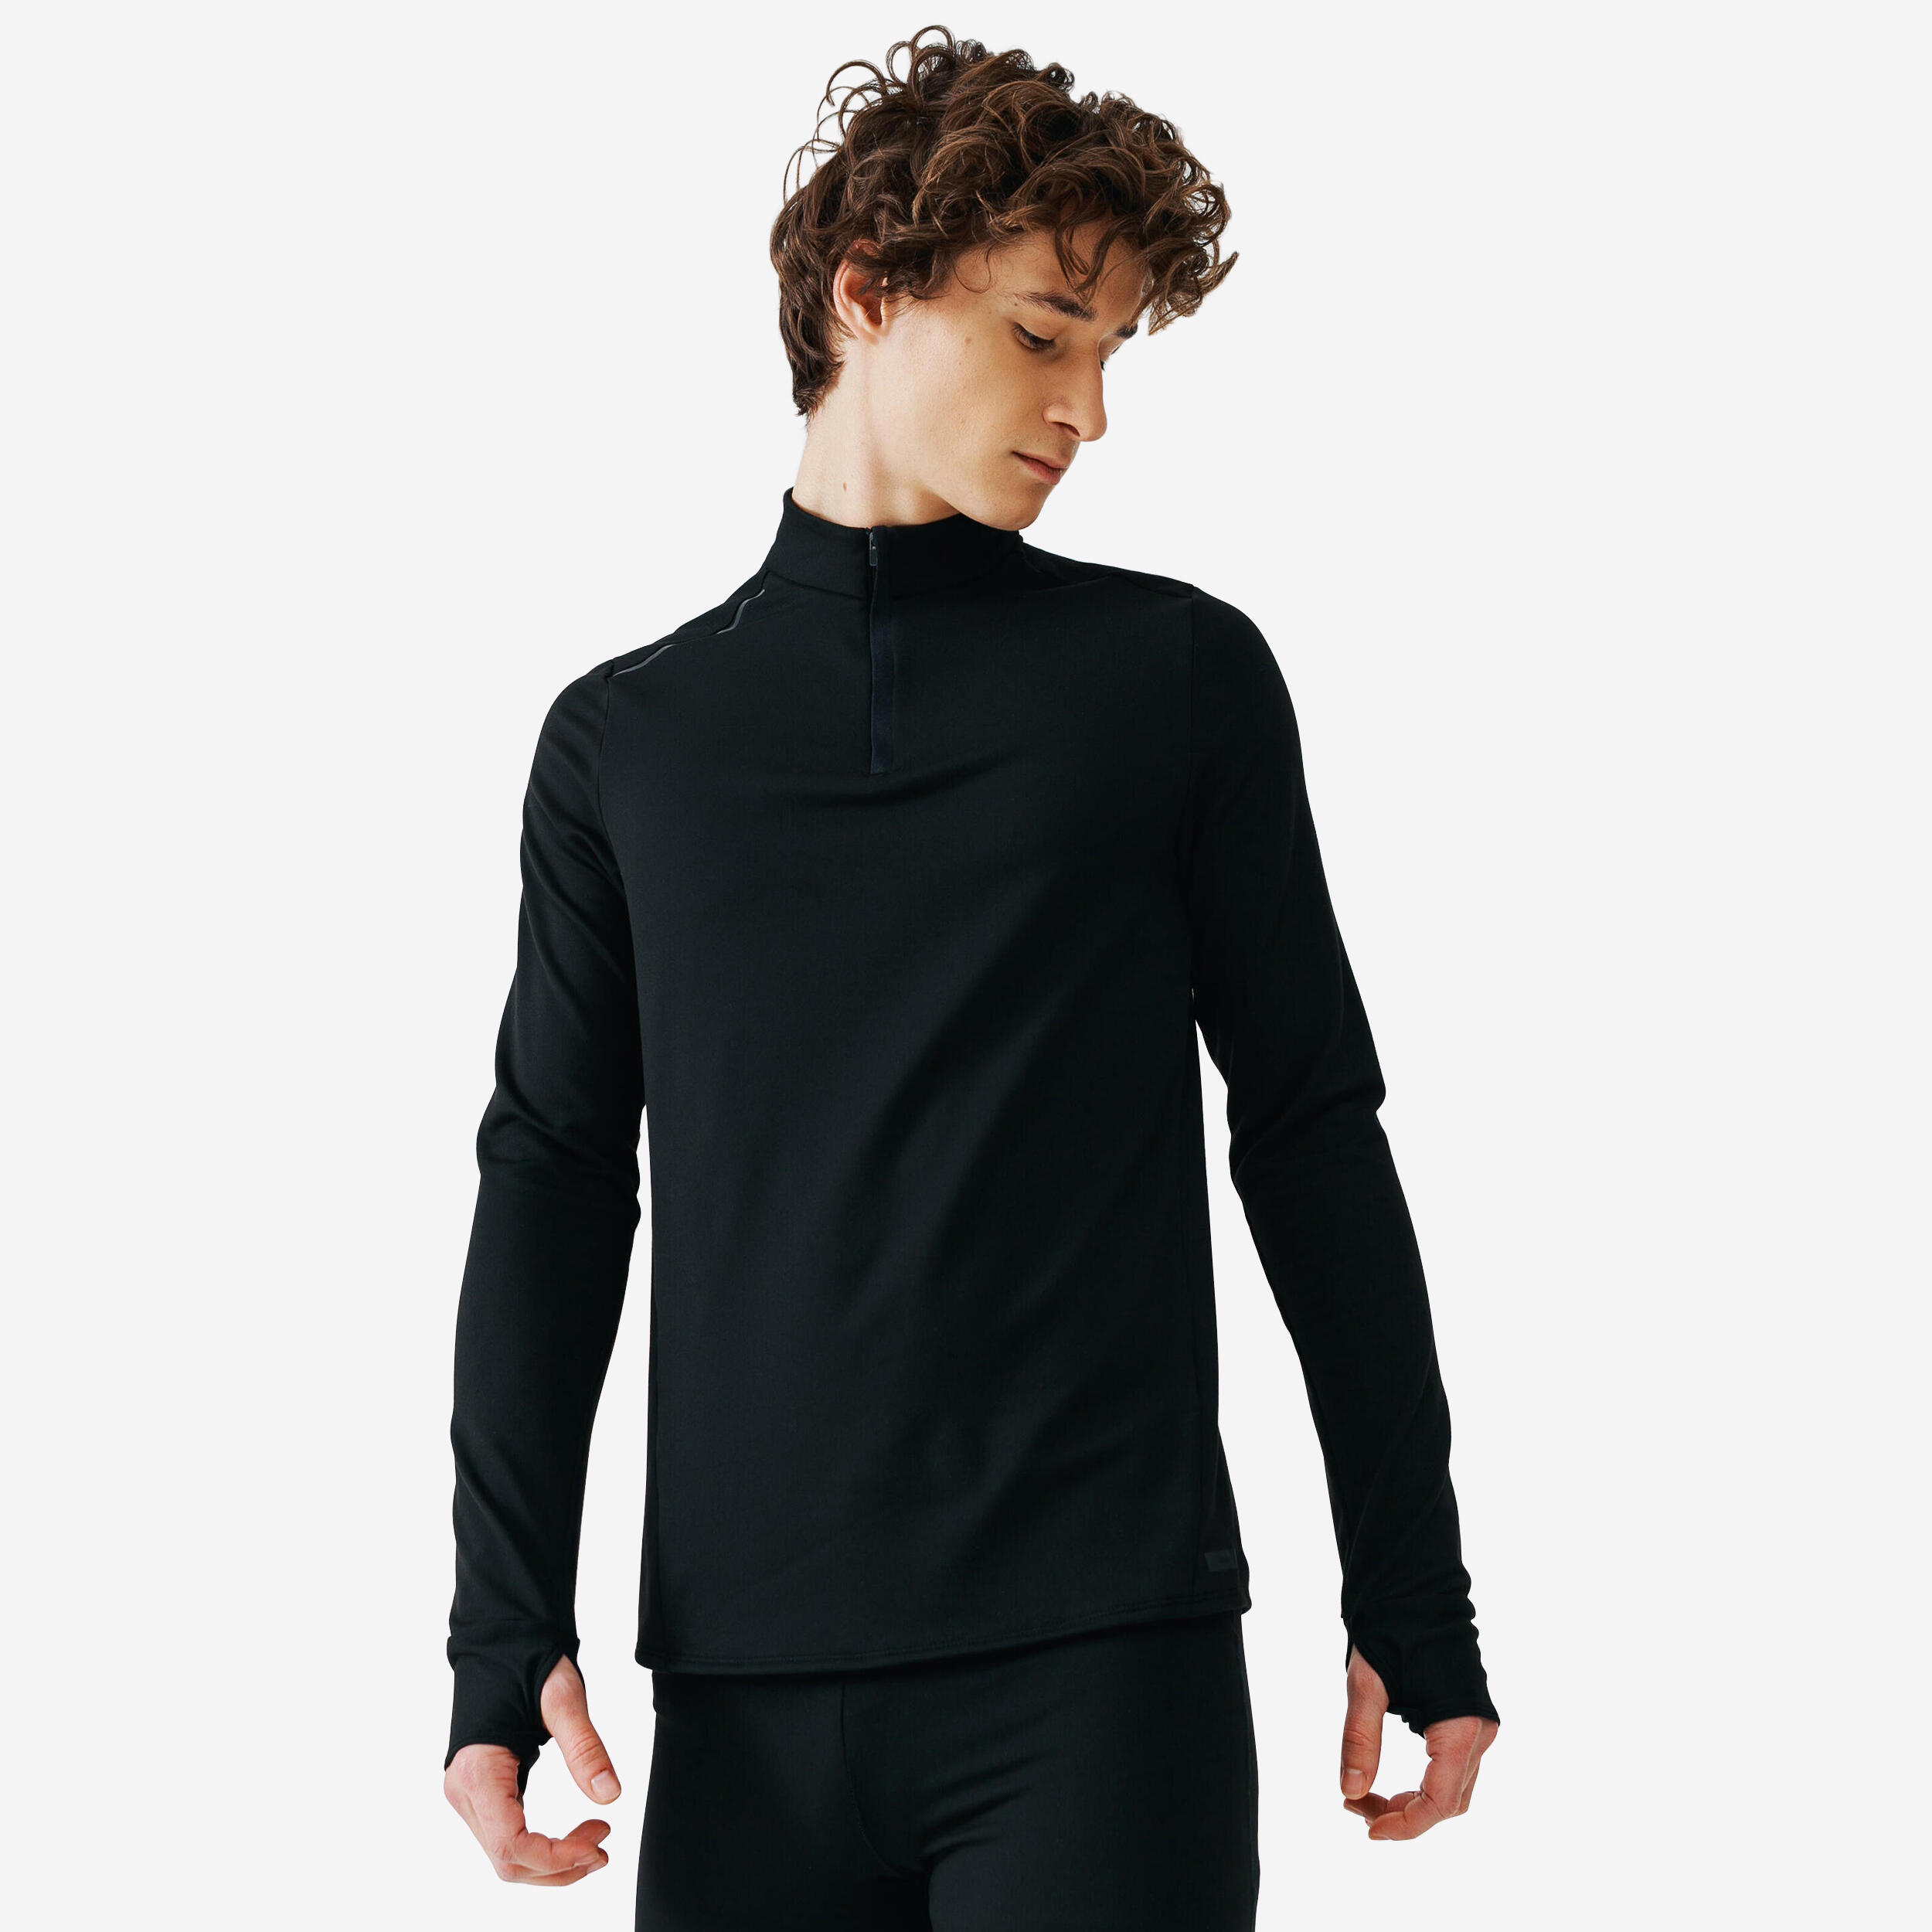 Men's Long-Sleeved Running Shirt - Black - KALENJI